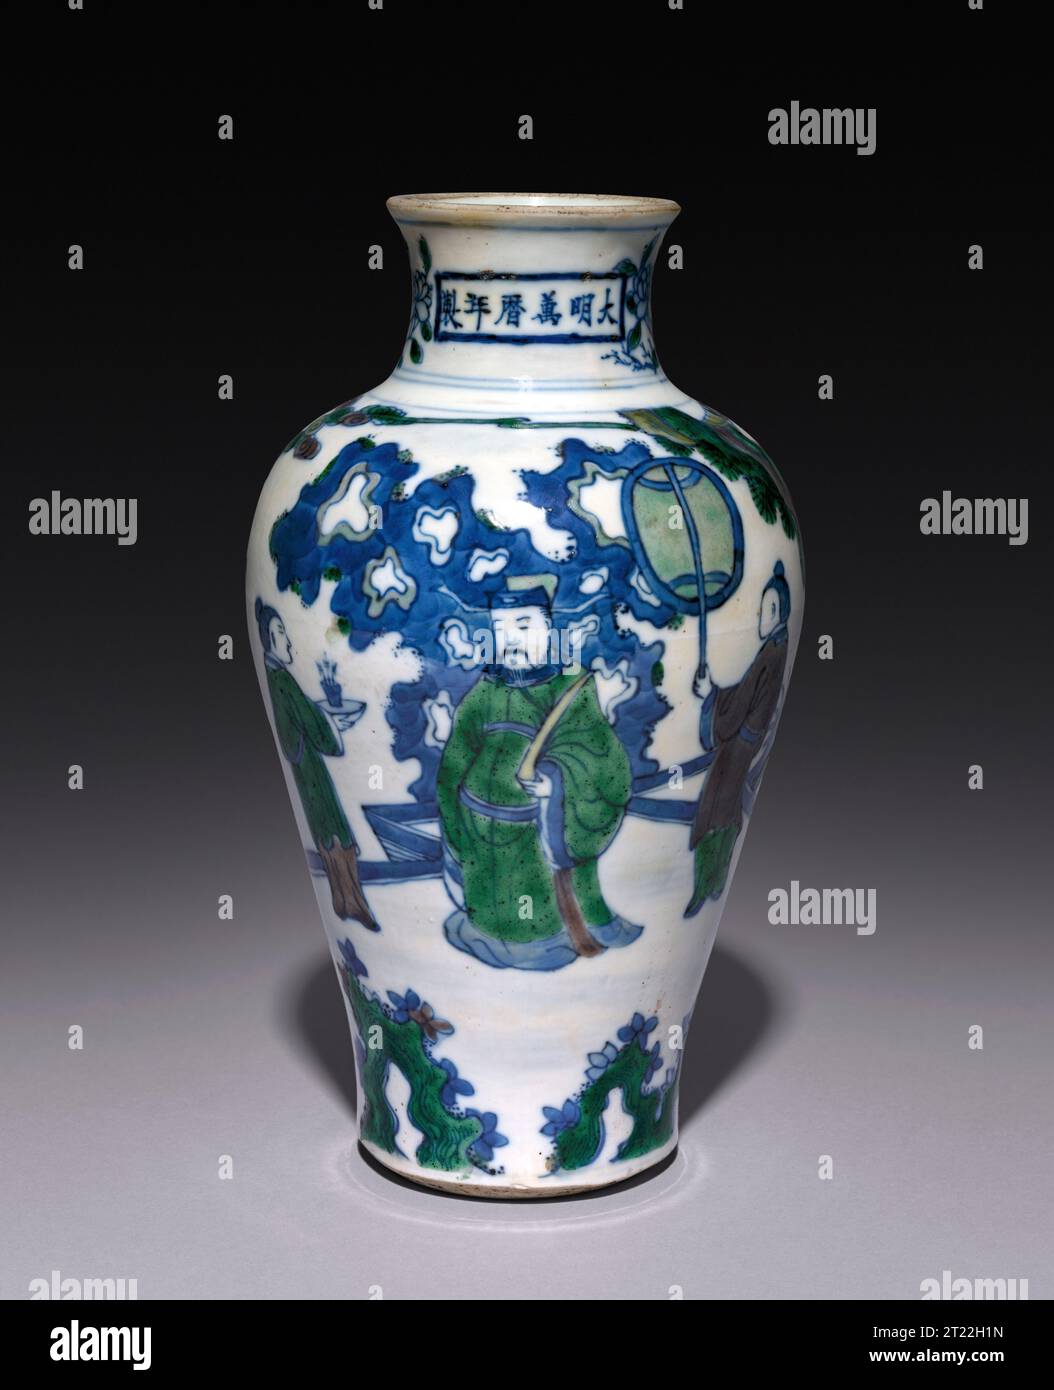 Ming vase. Jingdezhen ware. Porcelain vase with underglaze blue decoration.  Wanli reign of the Ming Dynasty (1772-1620 AD) Stock Photo